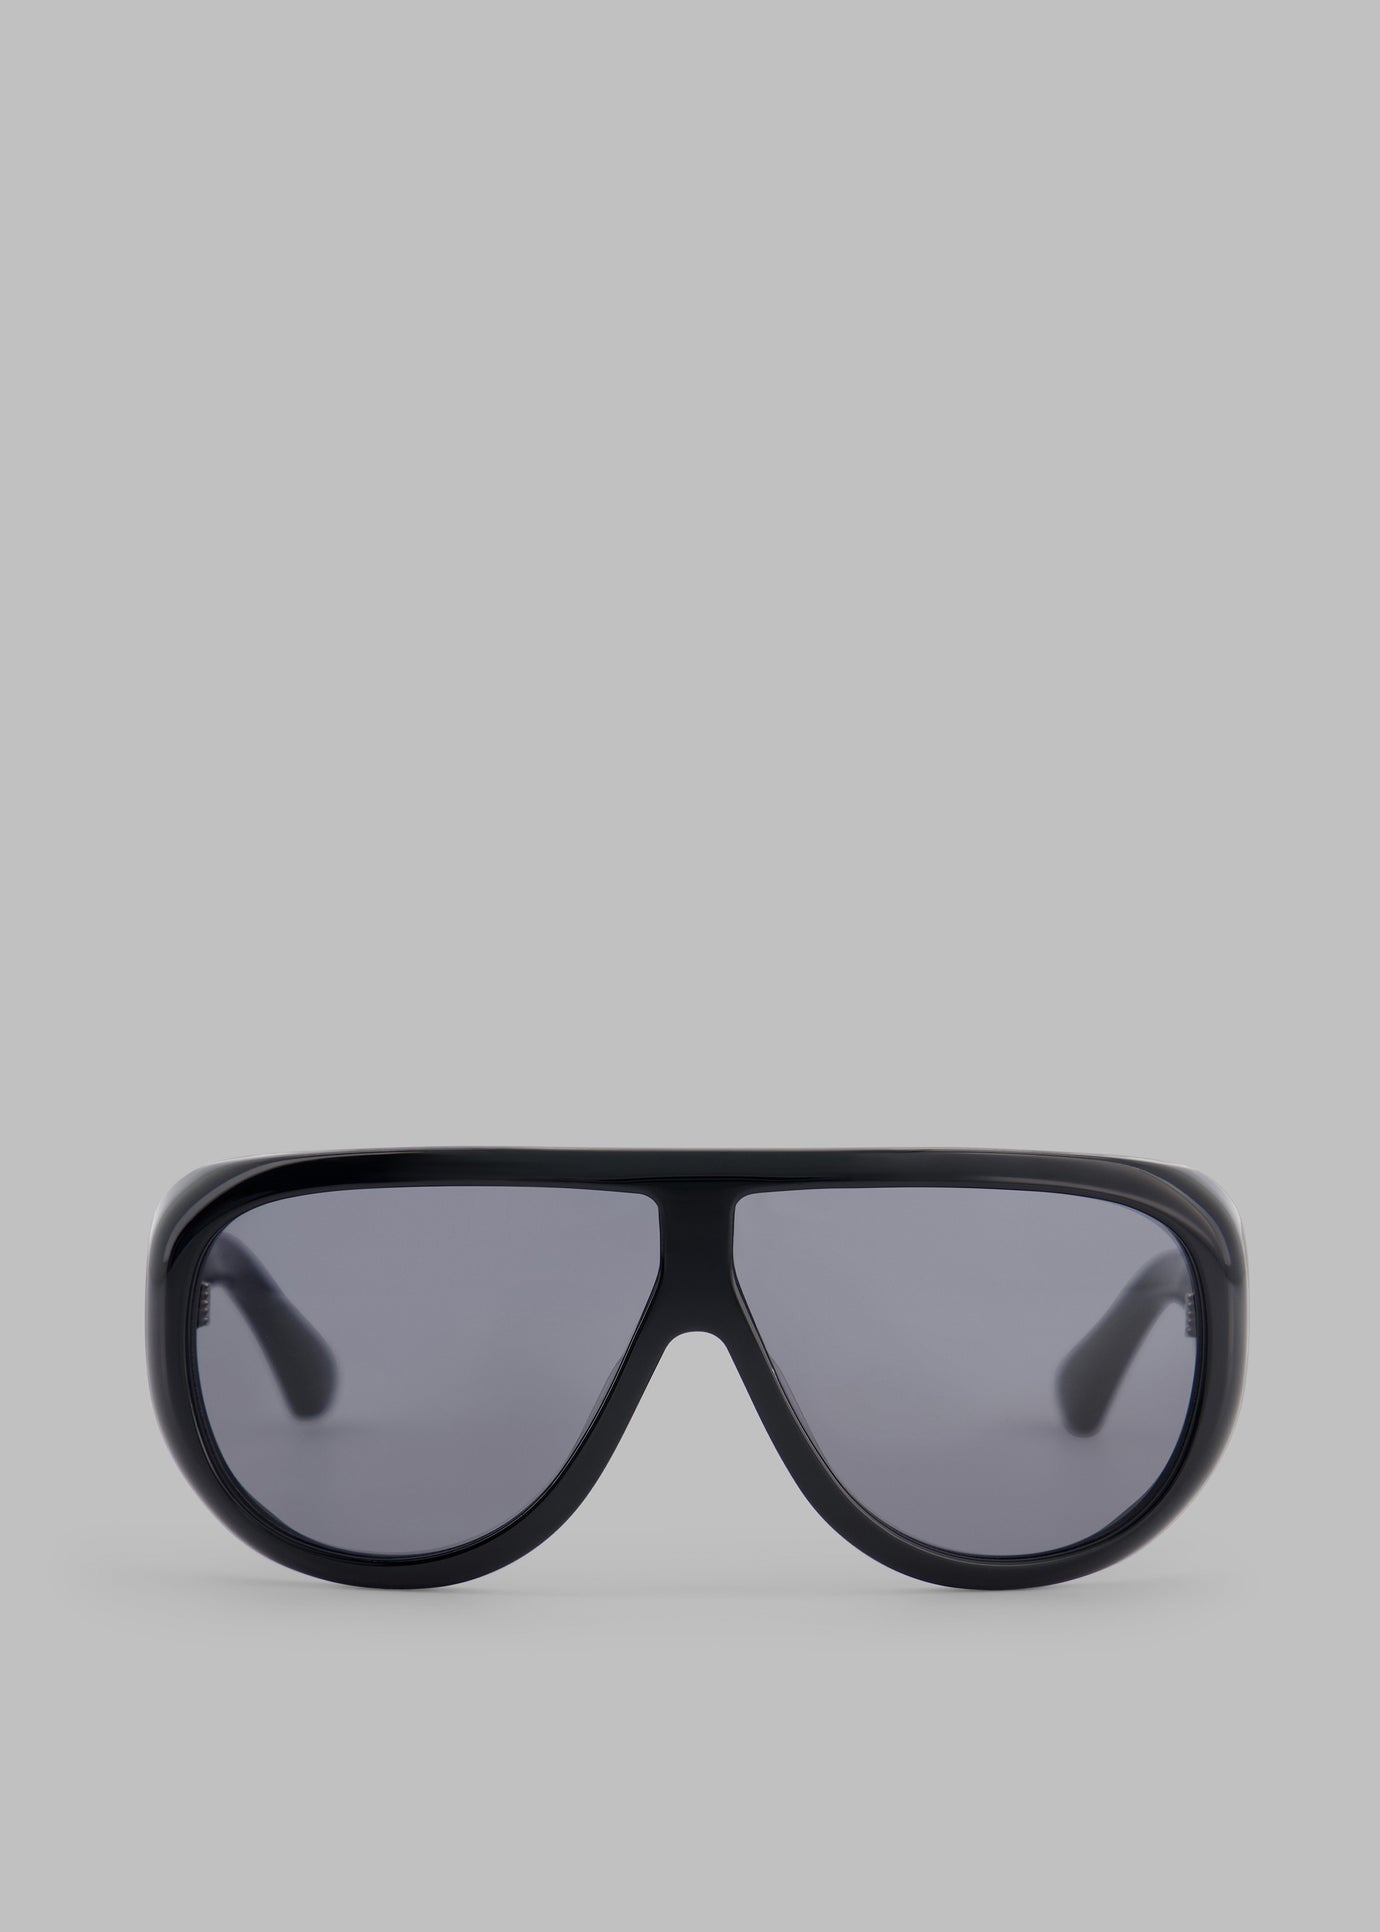 Port Tanger Gambia Sunglasses - Black Acetate/Black Lens - 1